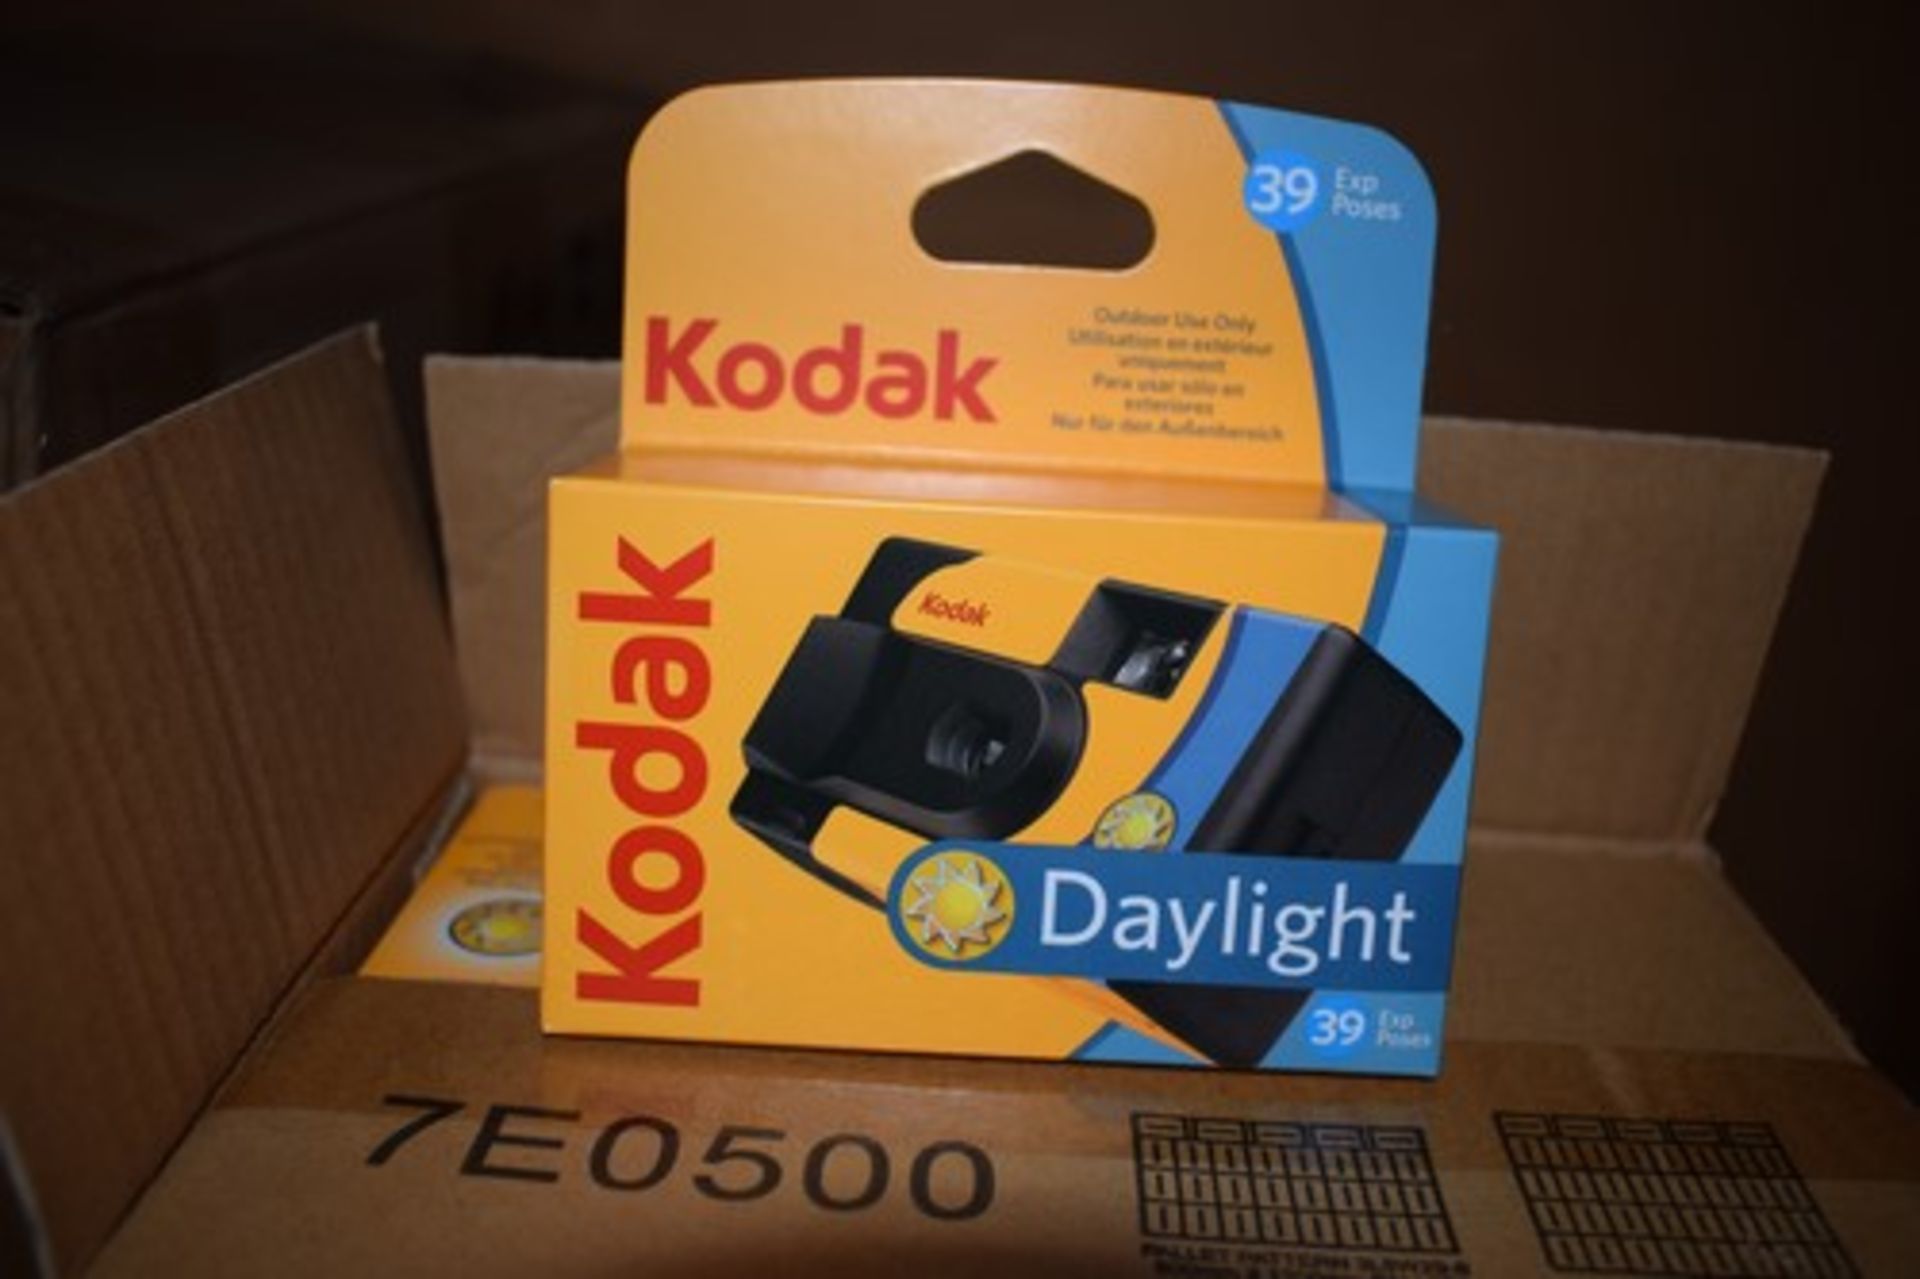 30 x Kodak Daylight 39 exp. Poses cameras, code: CAT1007087, EAN: 041771007089, expiry: 03/25 -